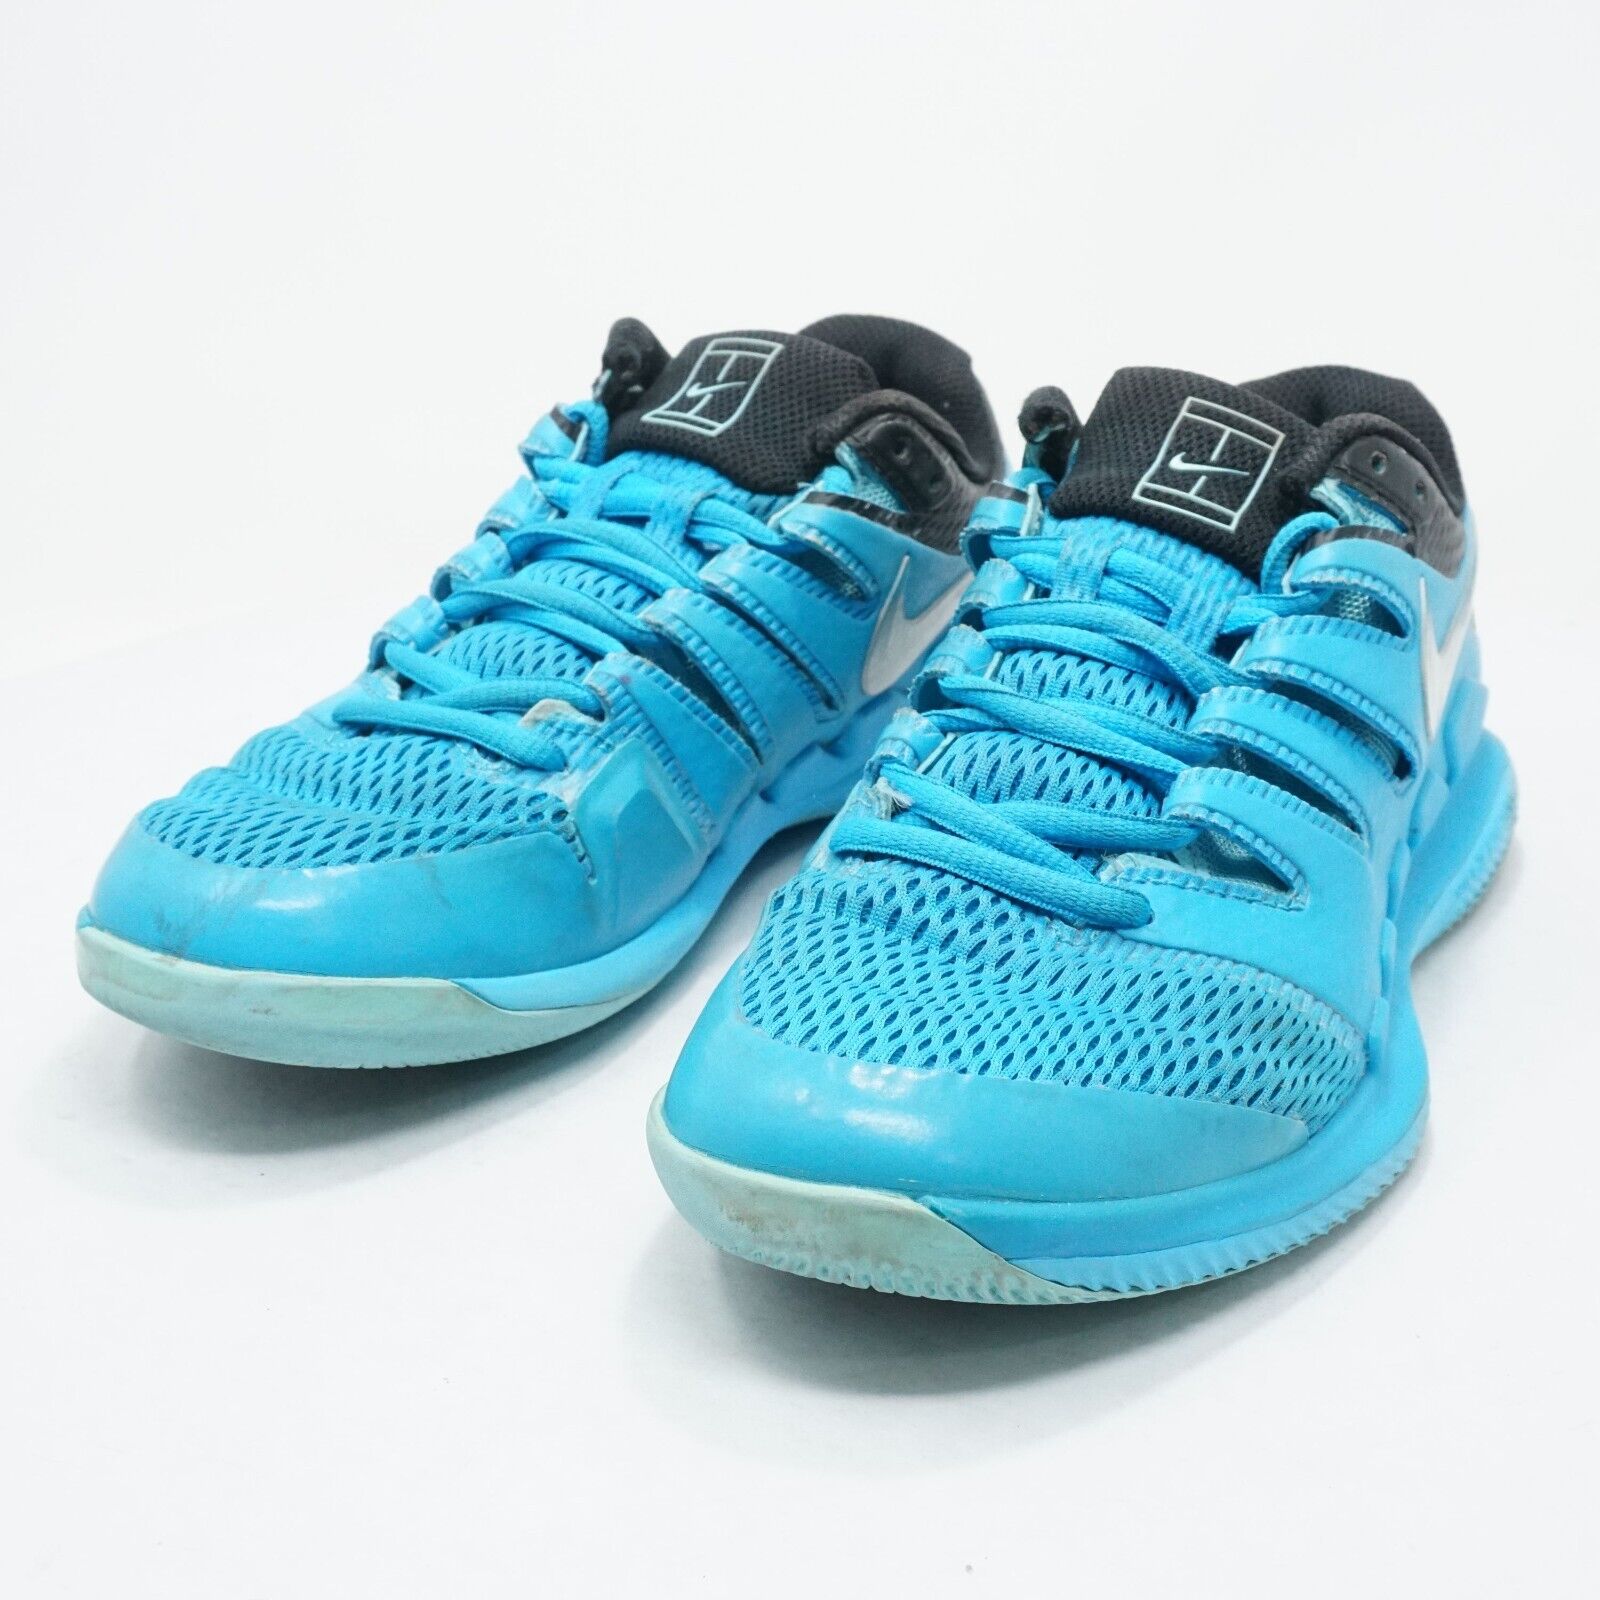 Nike Womens Air Zoom Vapor X Tennis Shoes Size 7 Light Blue Black AA8027-403